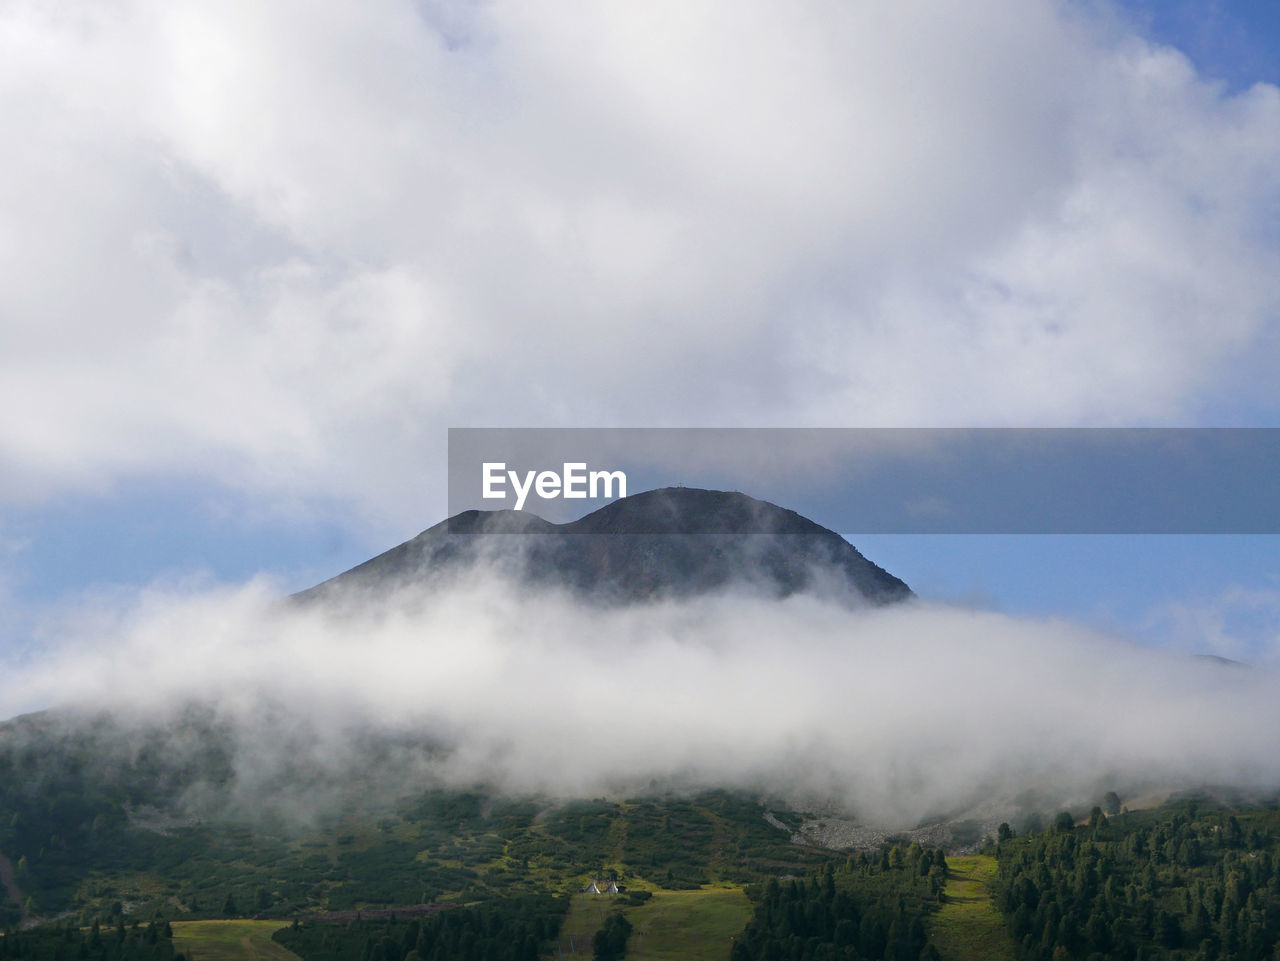 Evocative image of a mountain peak shrouded in fog